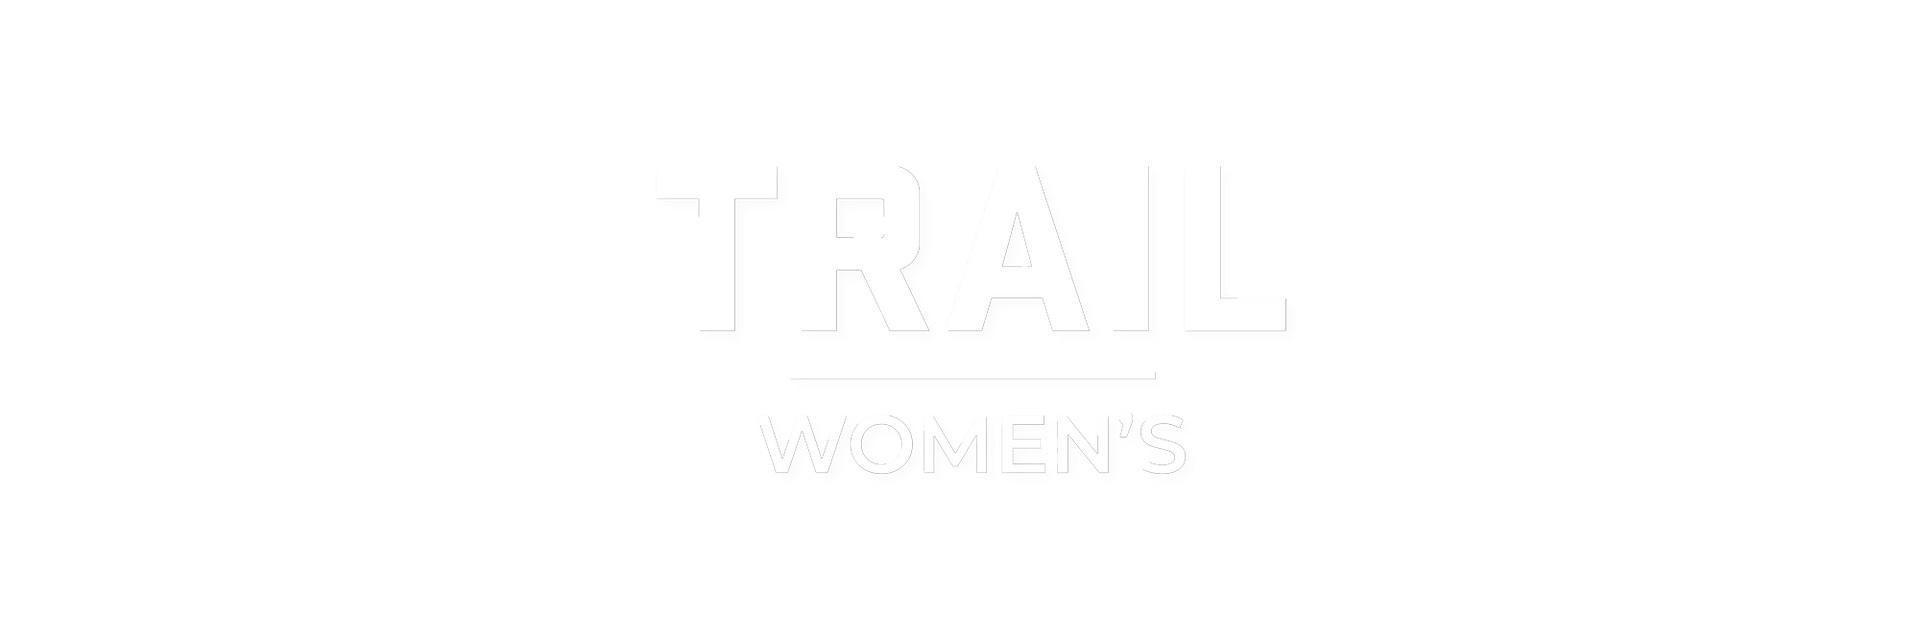 Women's Trail  Header Image Text Overlay